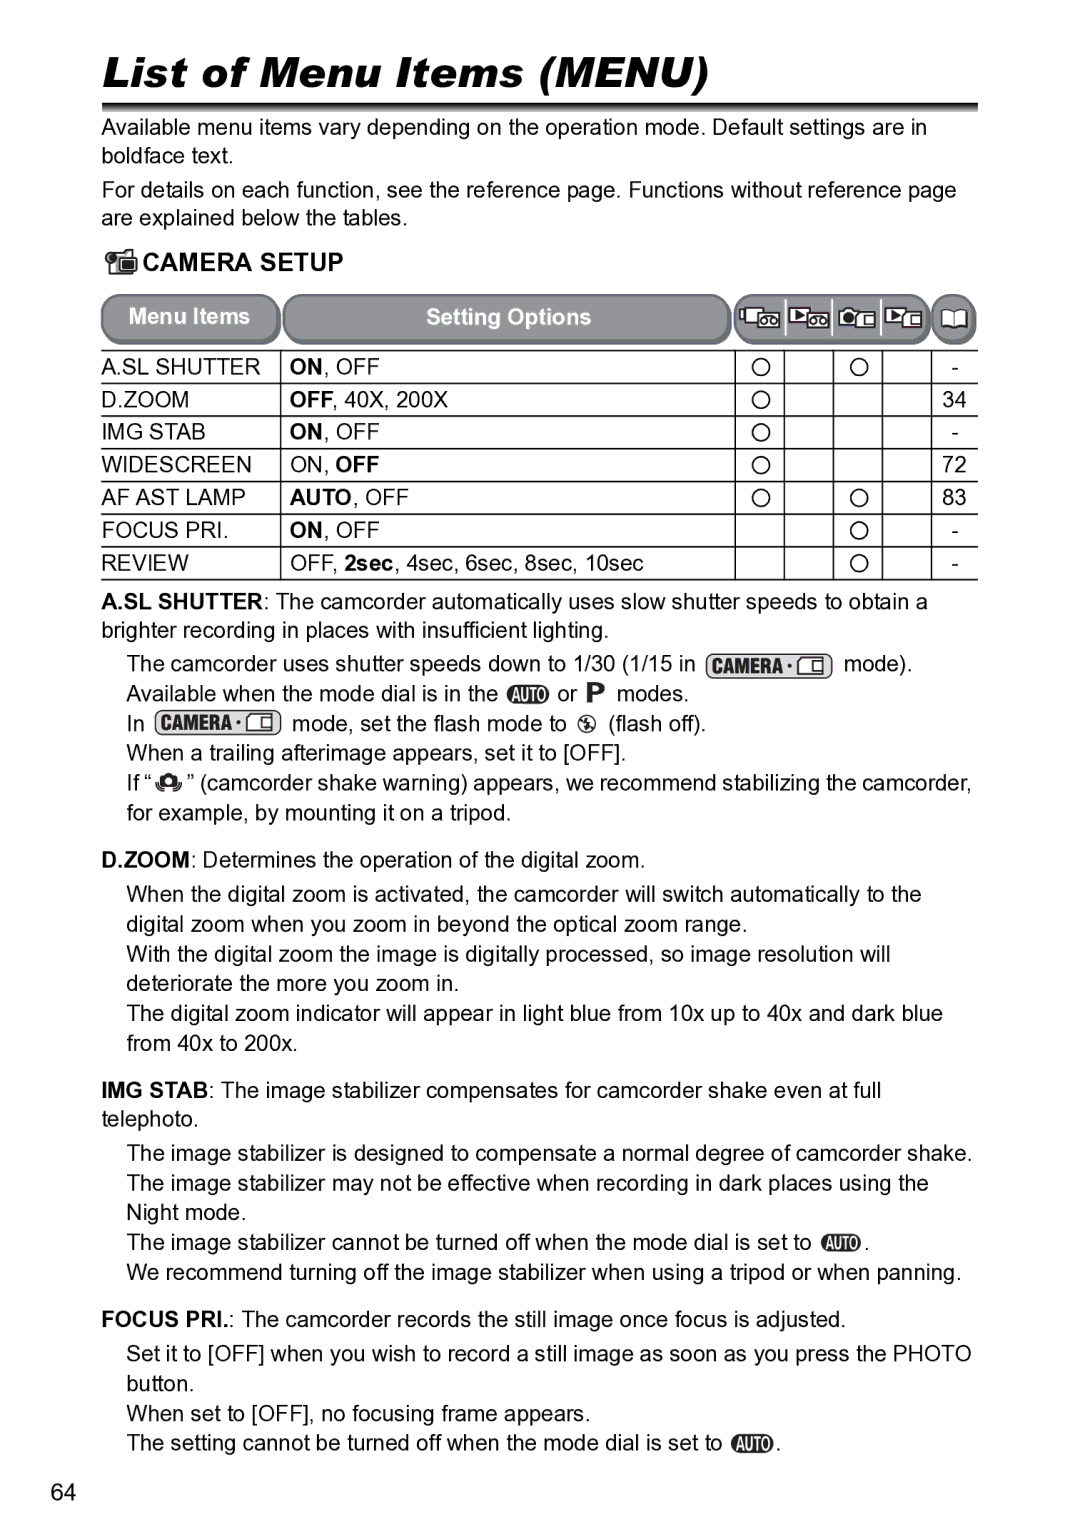 Canon S1 instruction manual List of Menu Items Menu, Camera Setup 